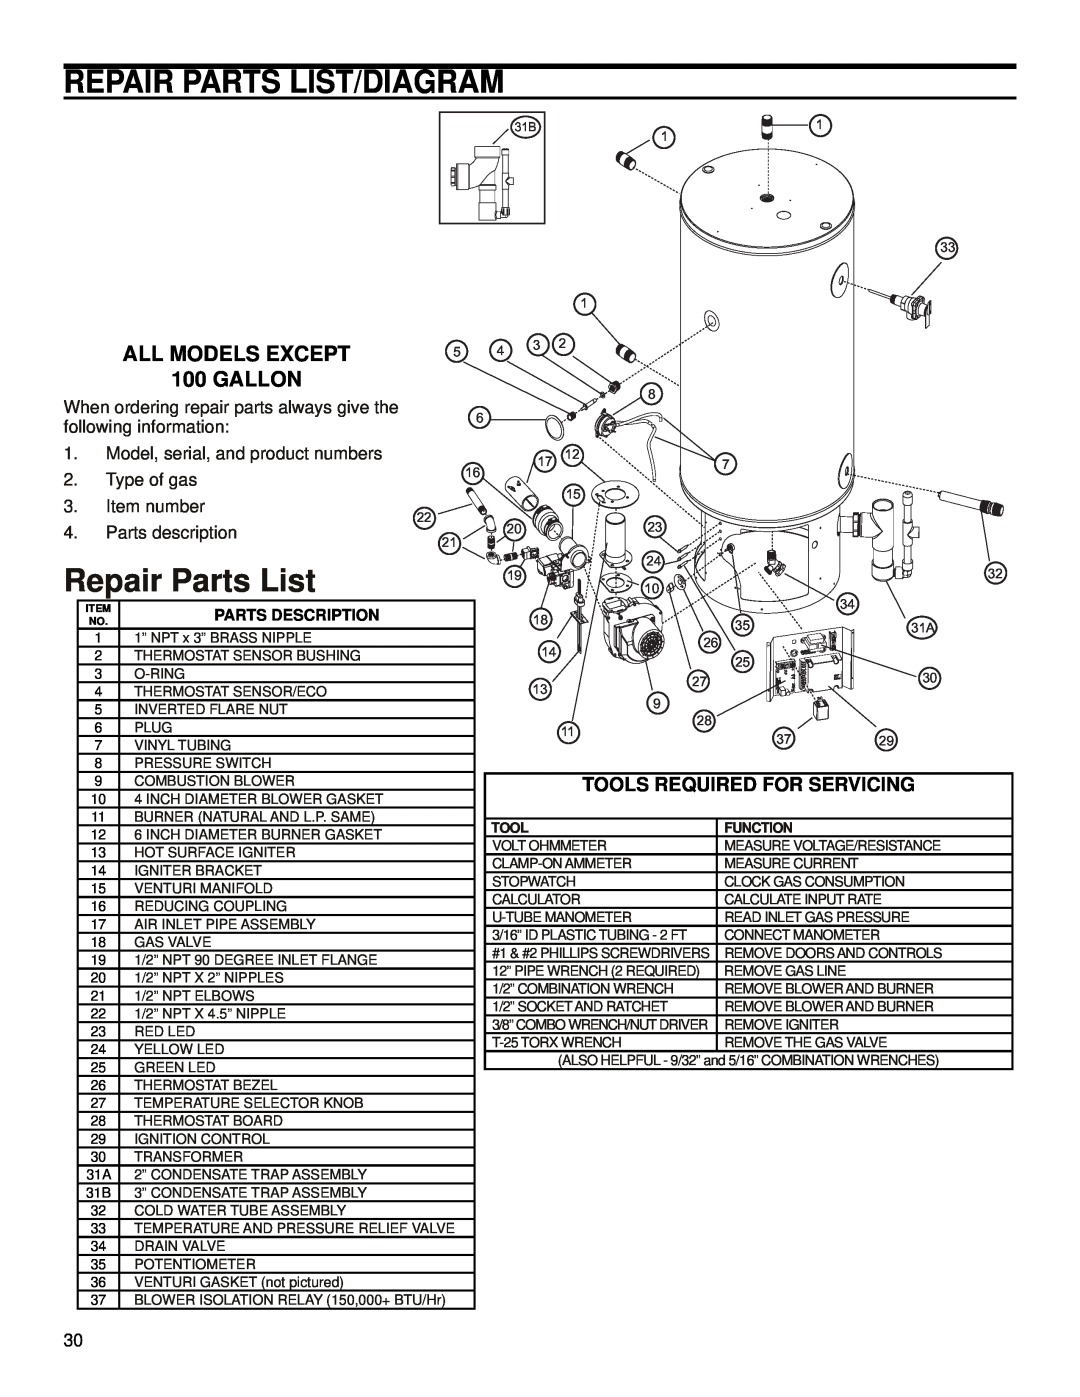 Polaris PR 150-34 2NV OR 2PV Repair Parts List/Diagram, Tools Required For Servicing, Parts Description, Function 